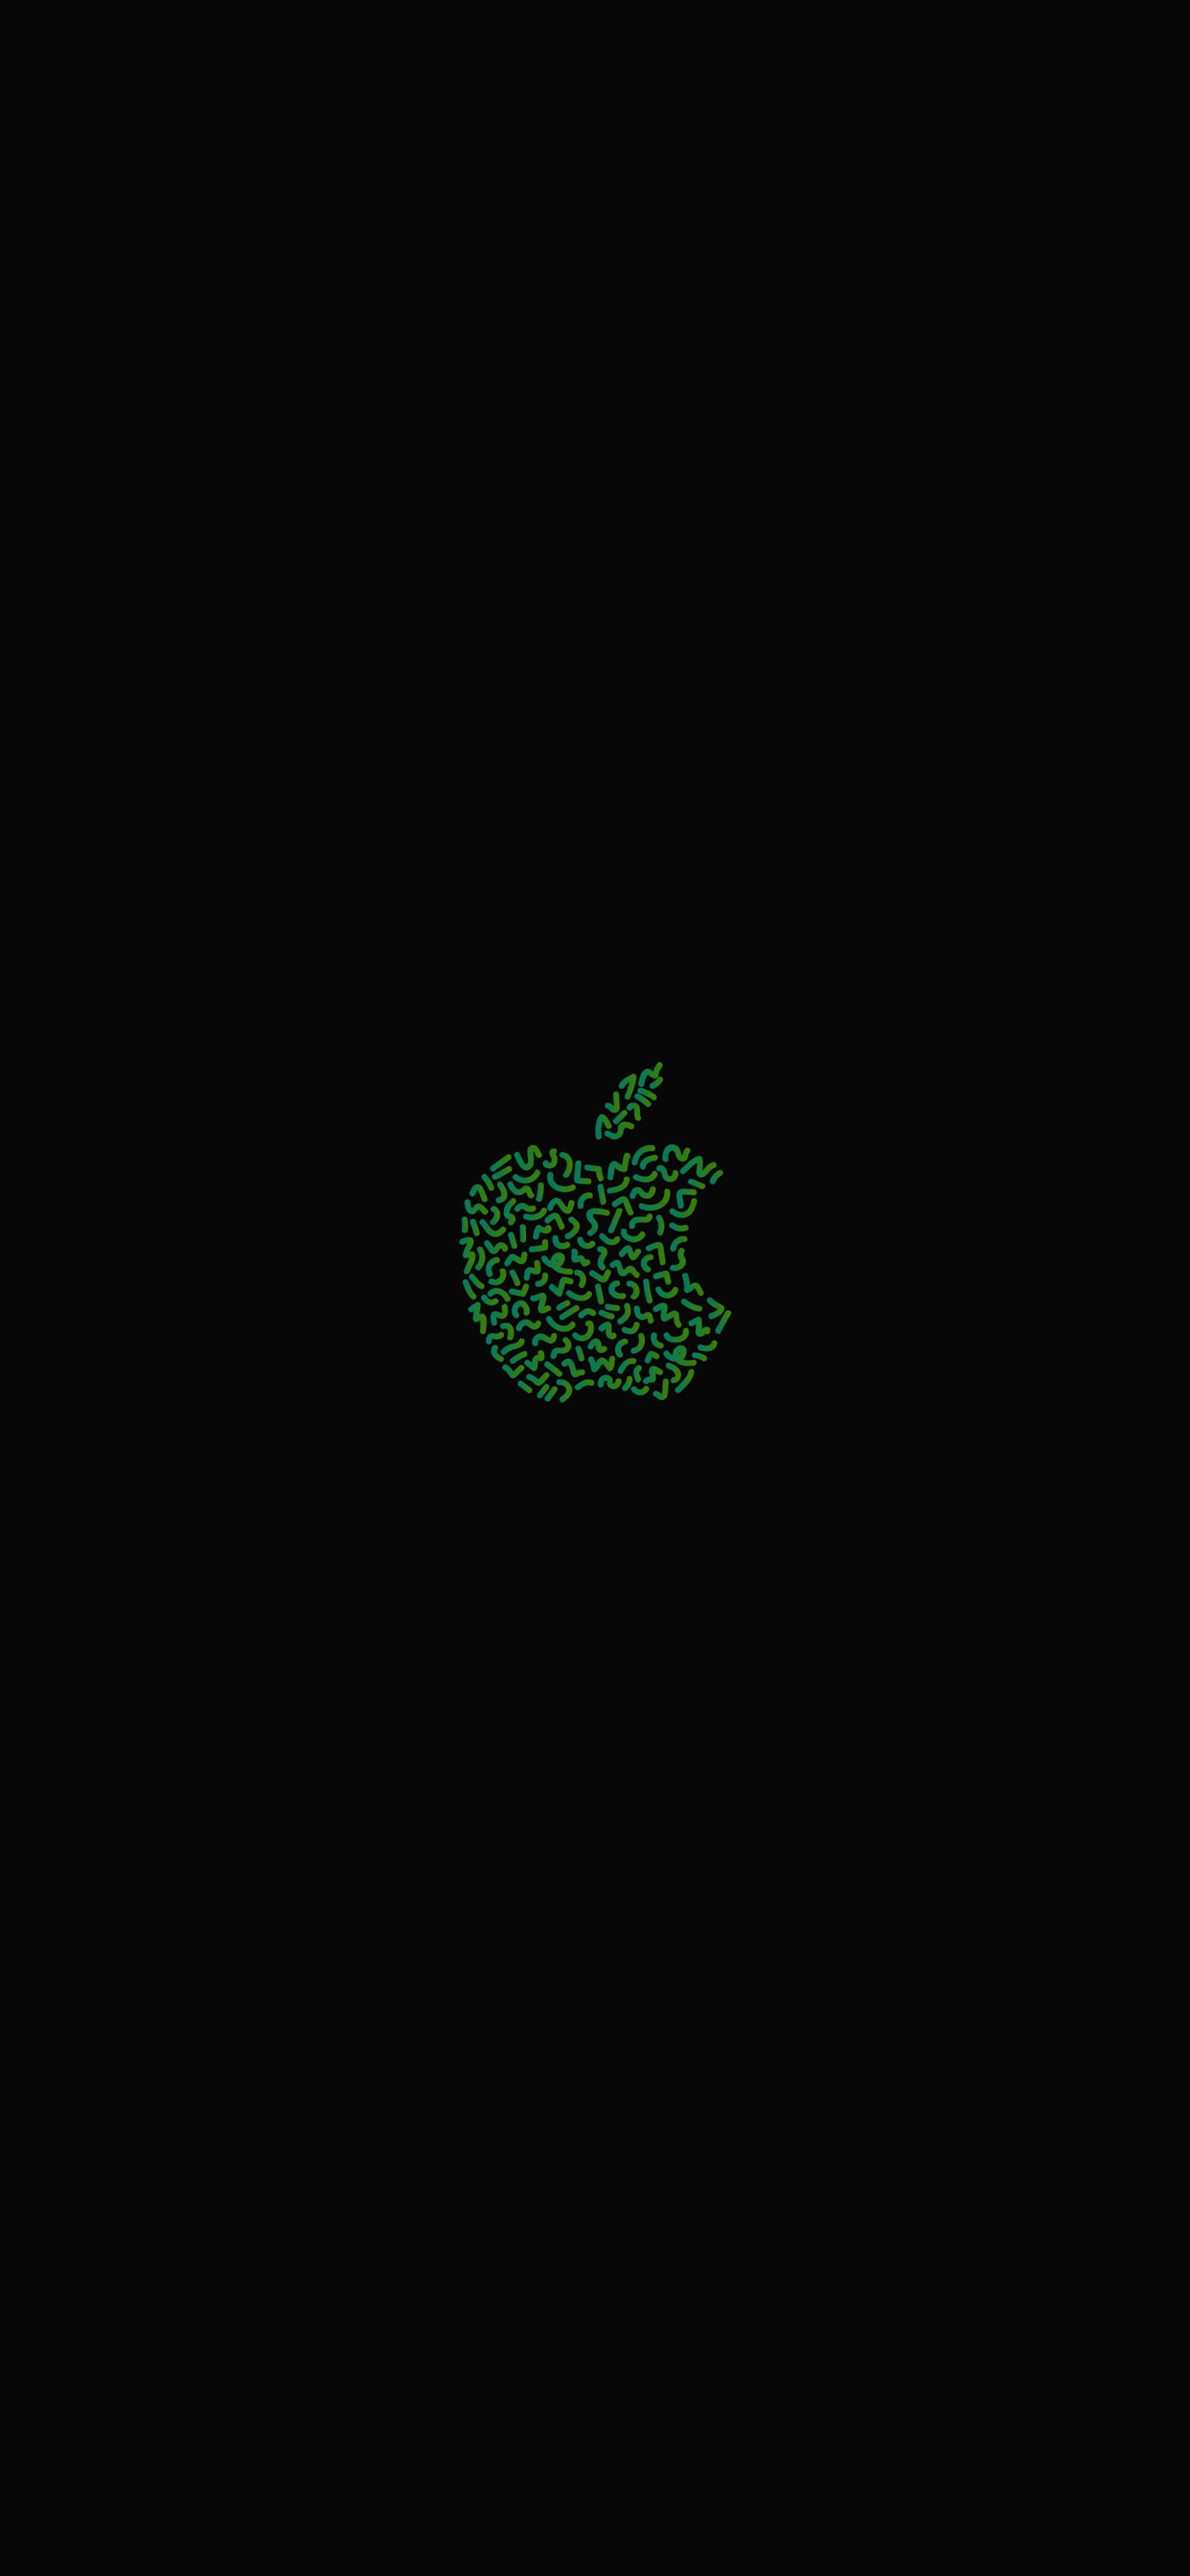 Green Apple Logo Wallpaper Free Green Apple Logo